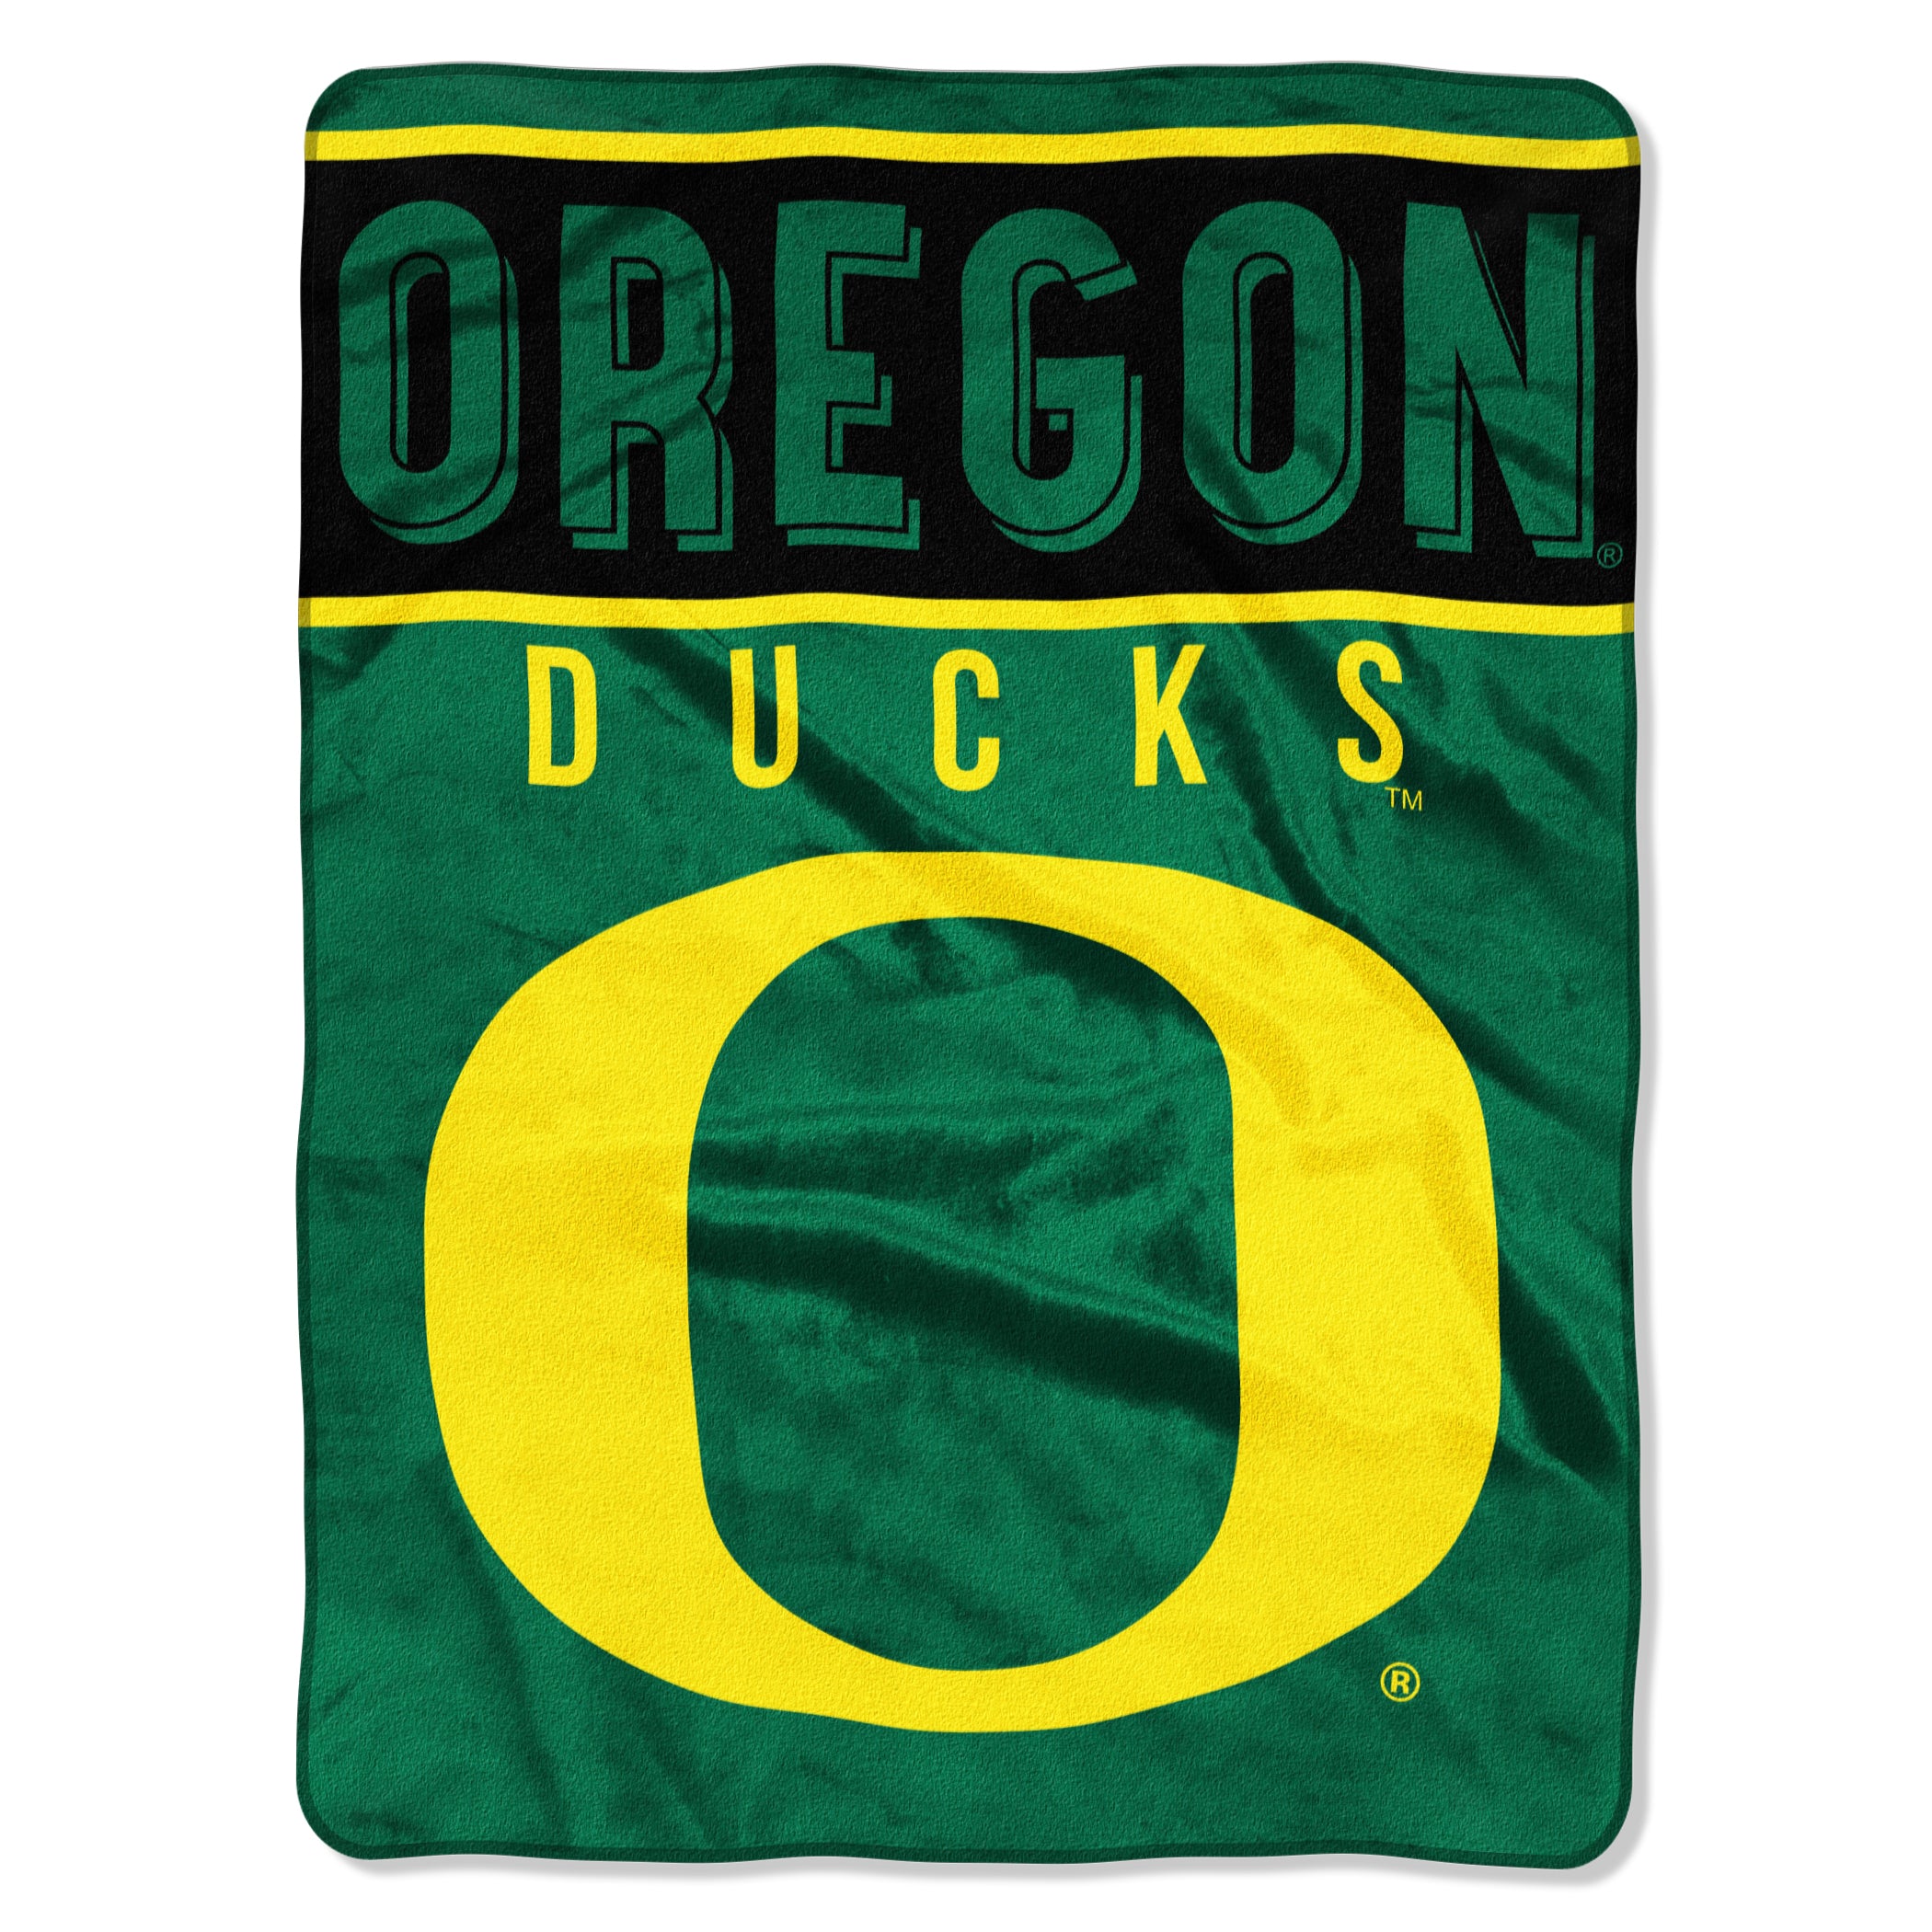 Oregon Ducks Blanket 60x80 Raschel Basic Design